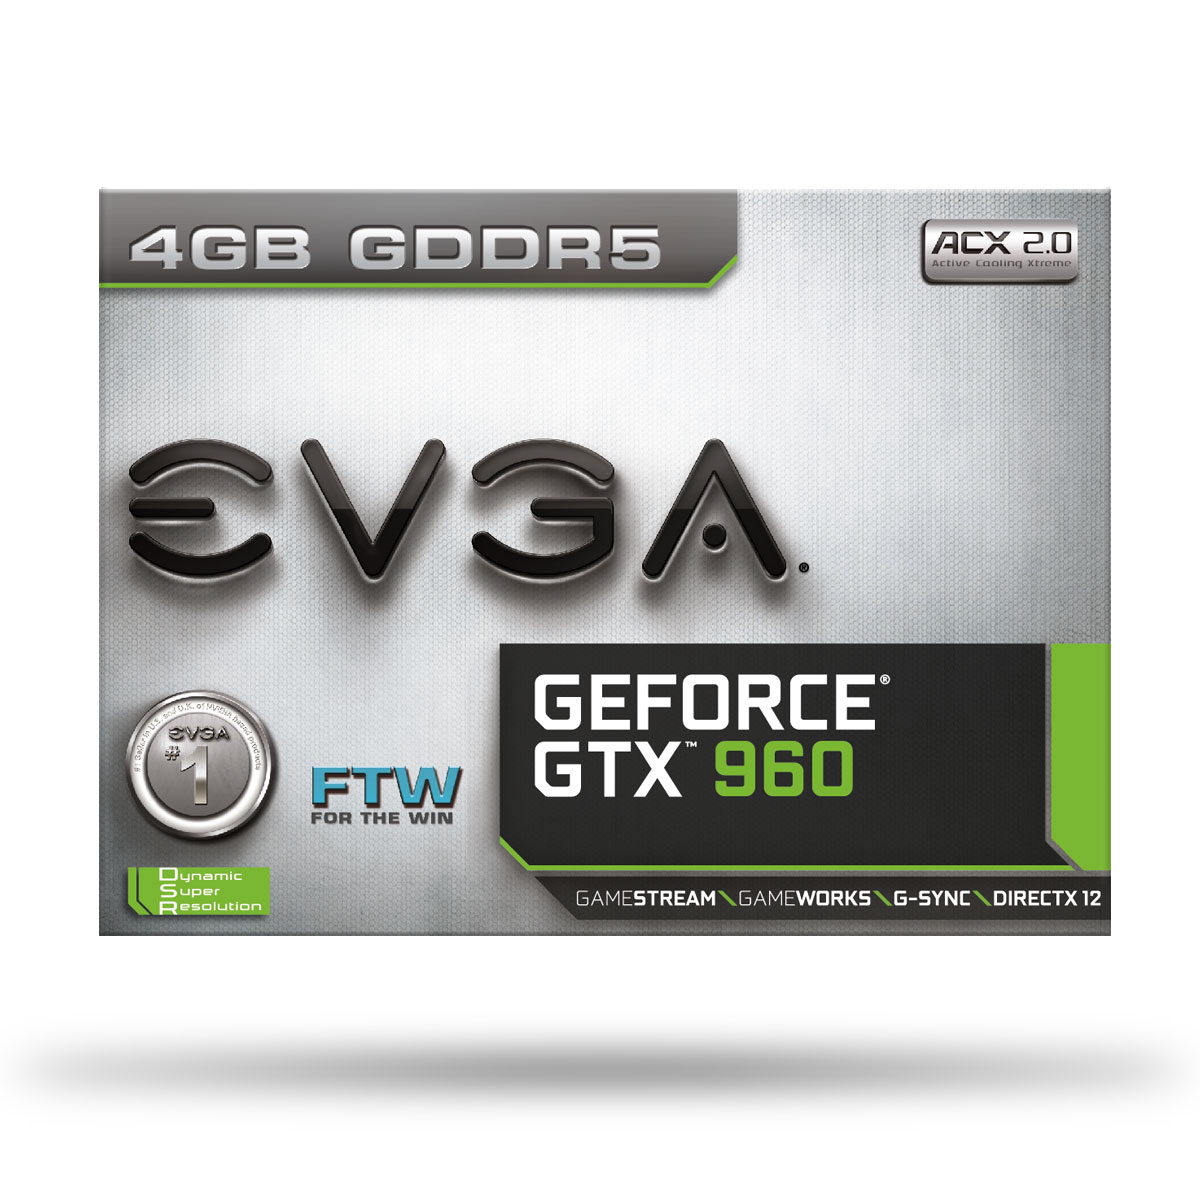 EVGA - Articles - EVGA GeForce GTX 960 4GB